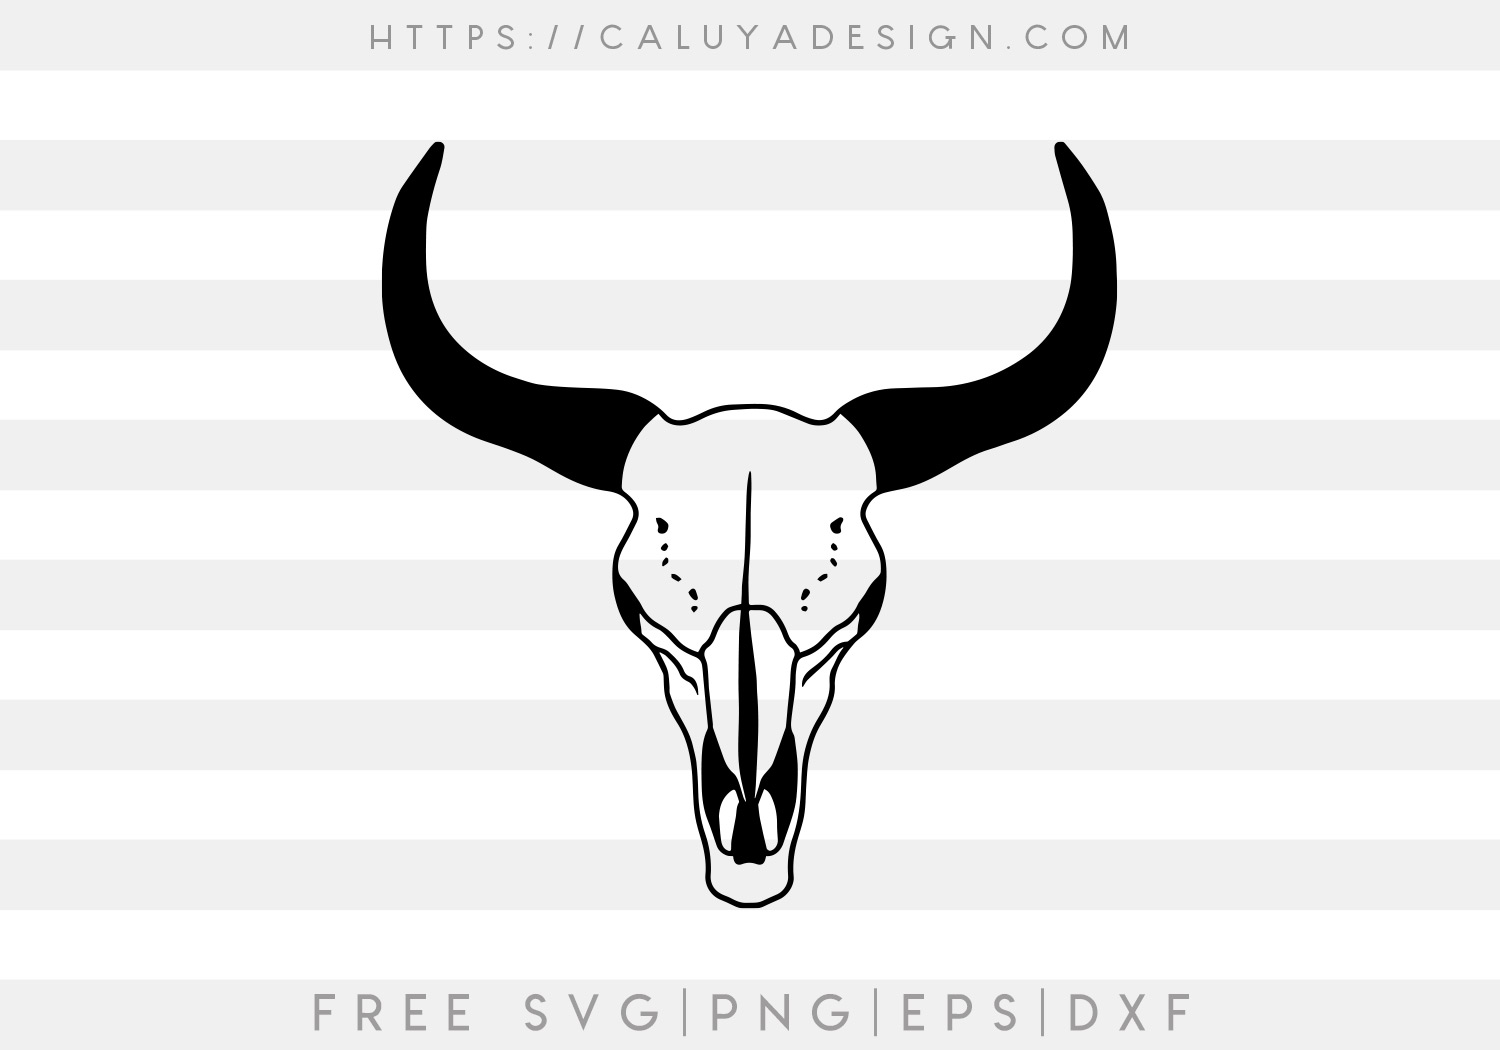 Free Hand Drawn Cow Skull SVG Cut File